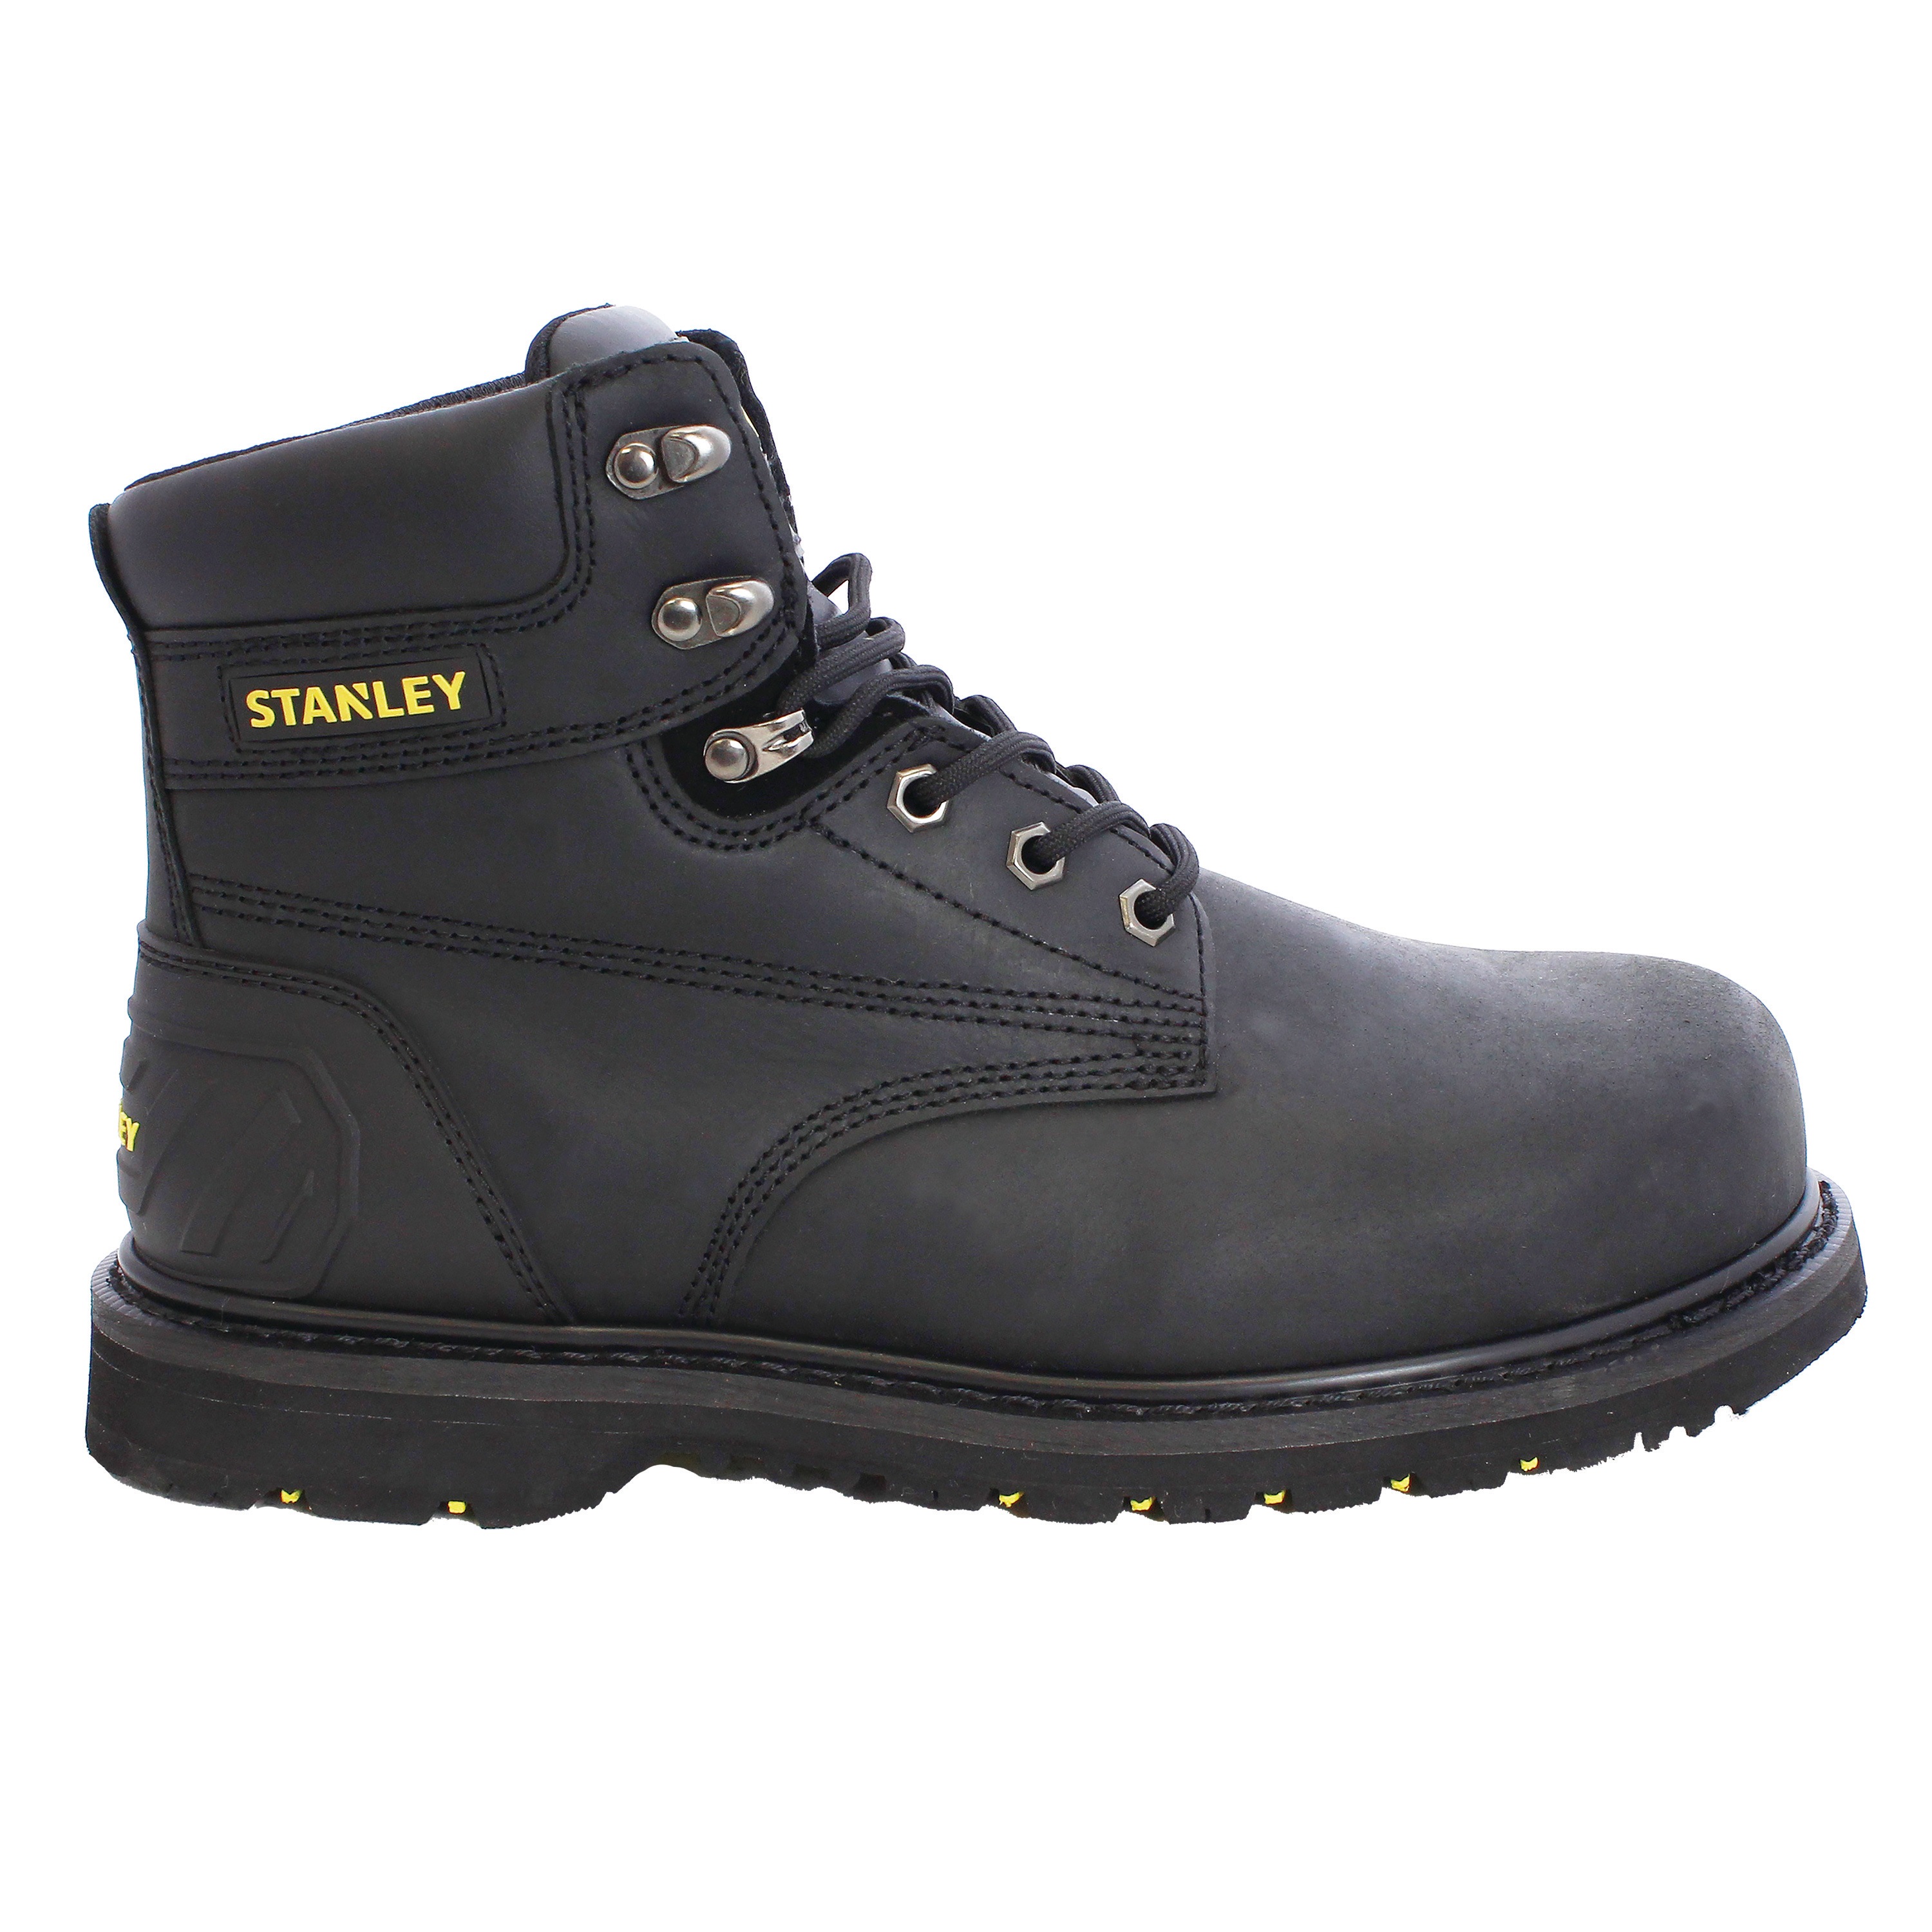 stanley work boots